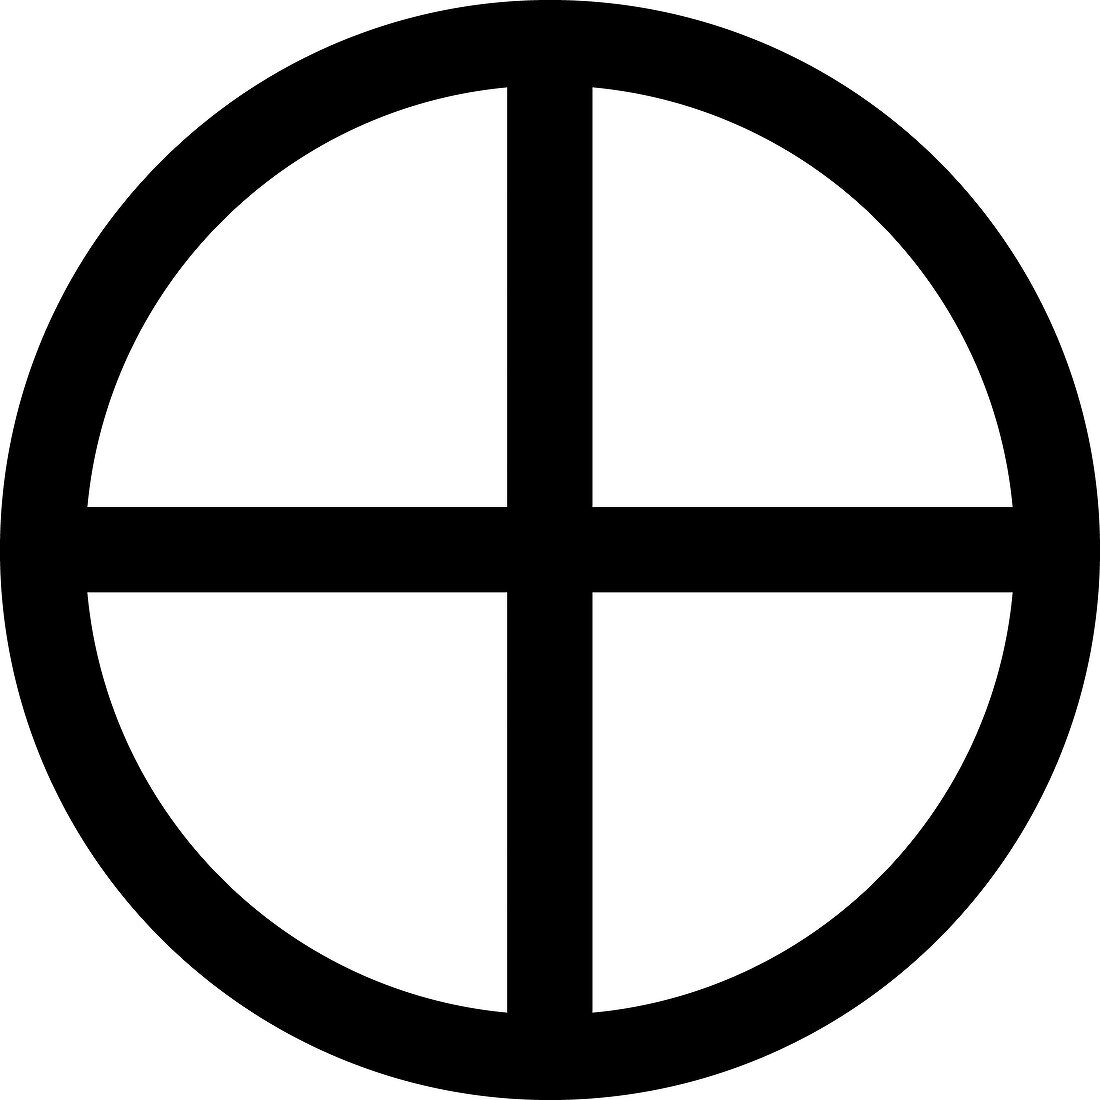 Earth's symbol